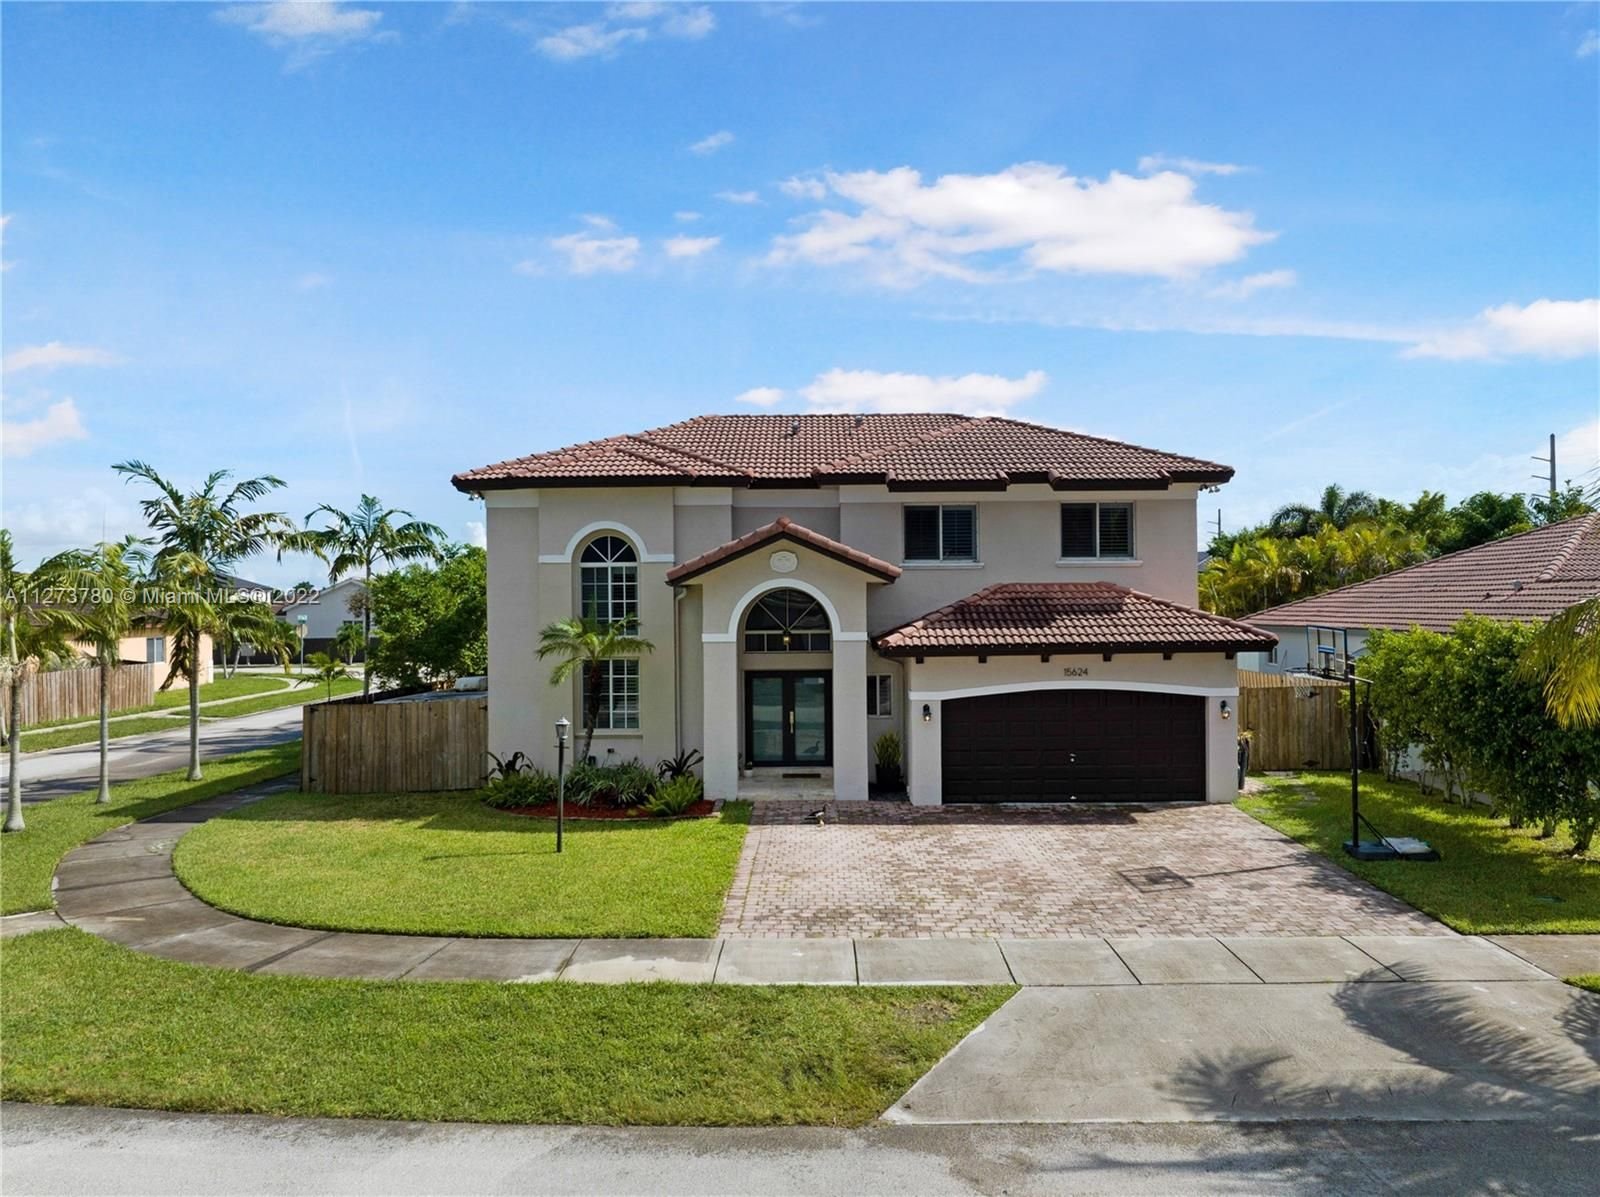 Real estate property located at 15624 20th St, Miami-Dade County, Miami, FL